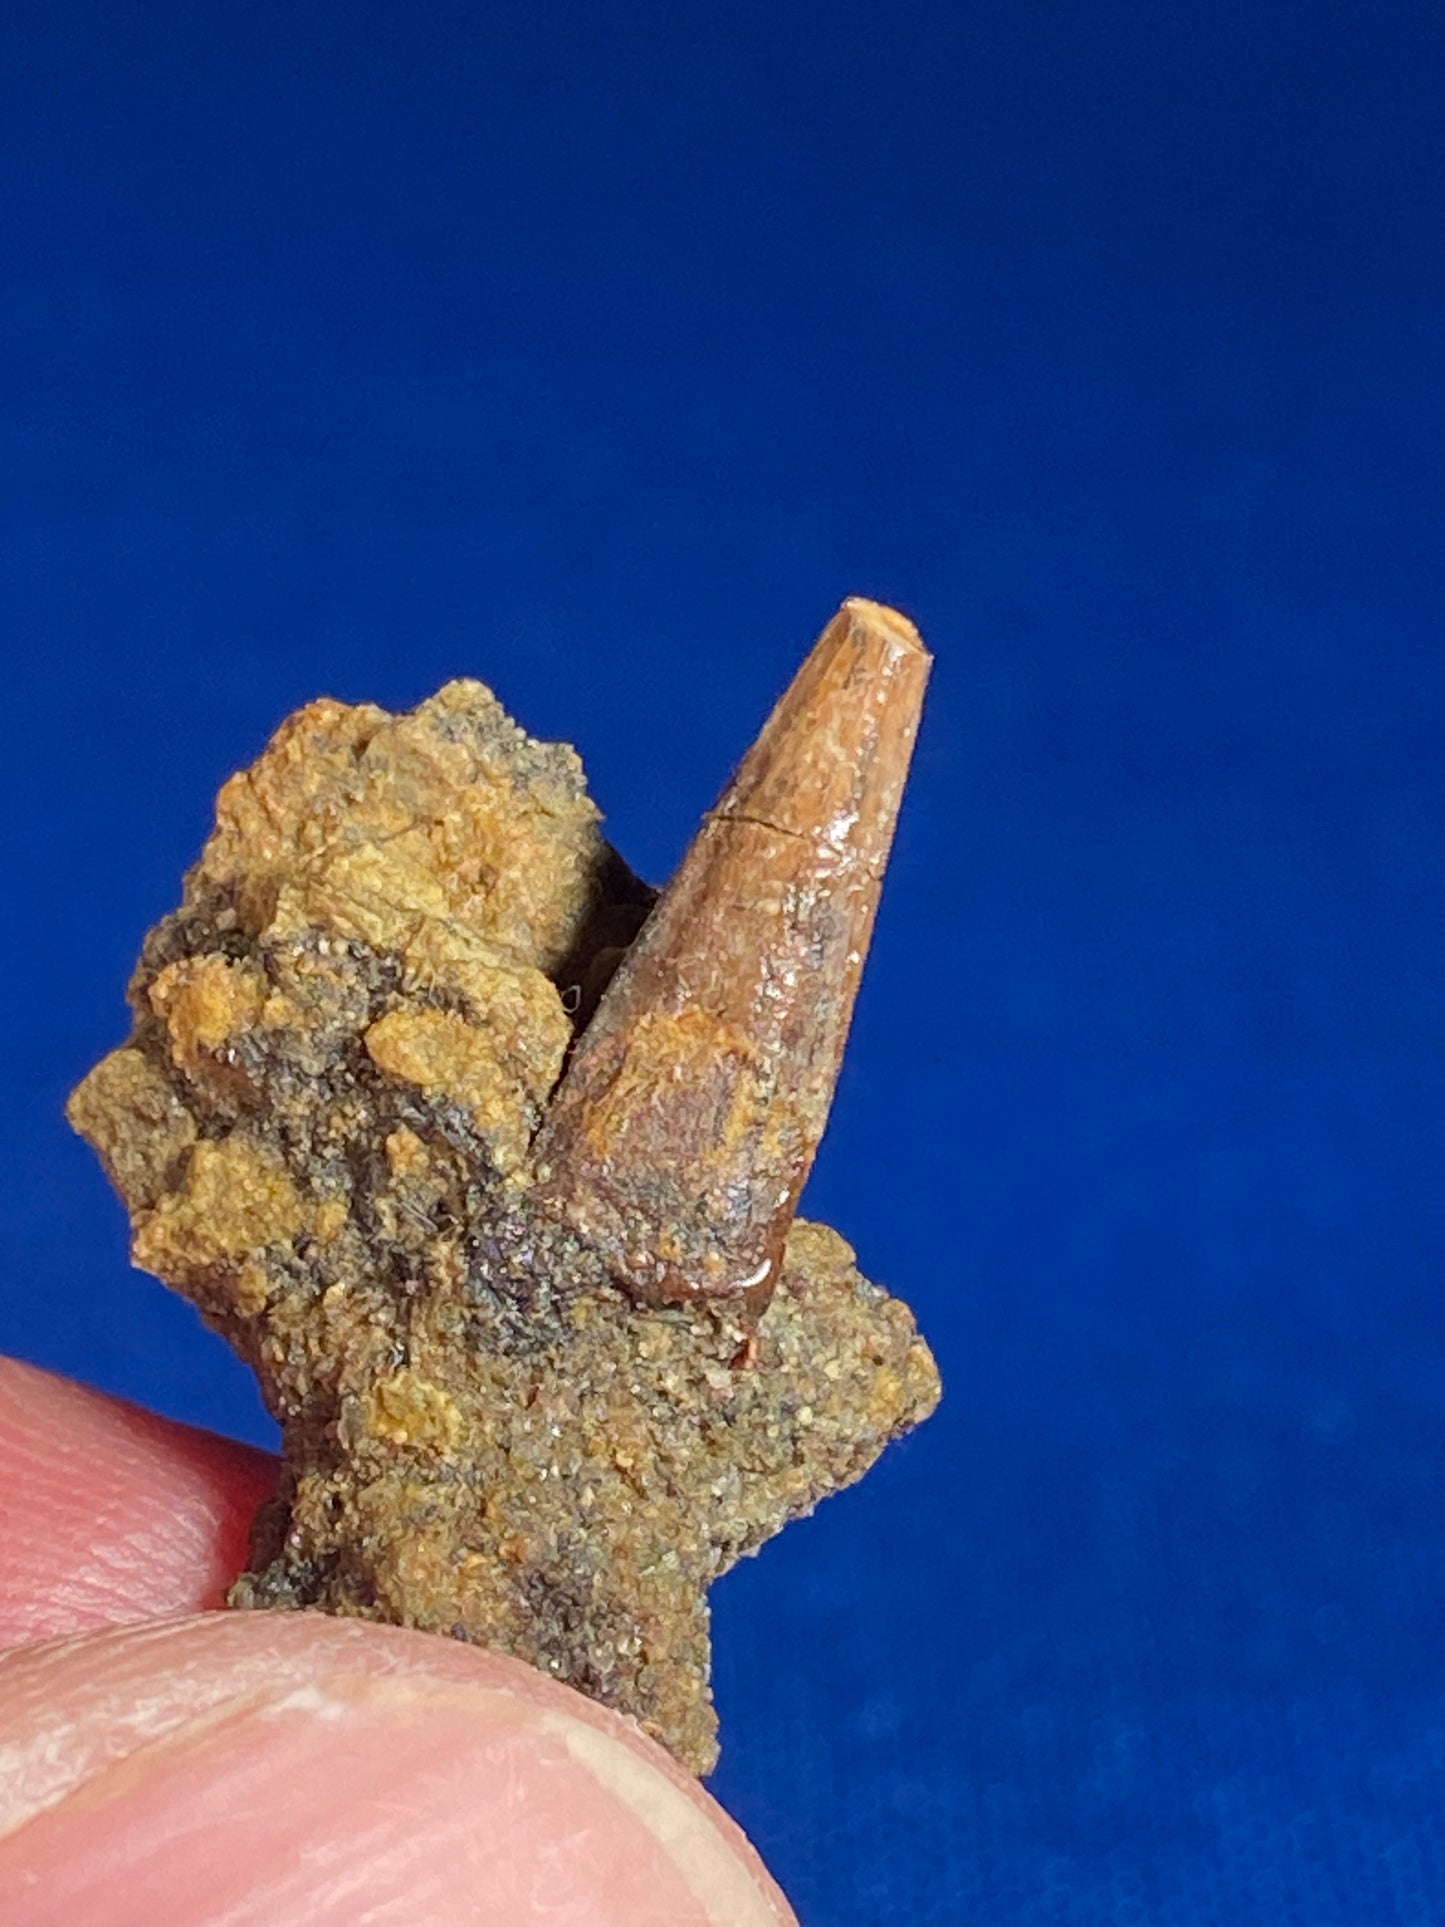 Richardoestesia tooth (1/2"), Hell Creek Formation, Garfield County, Montana